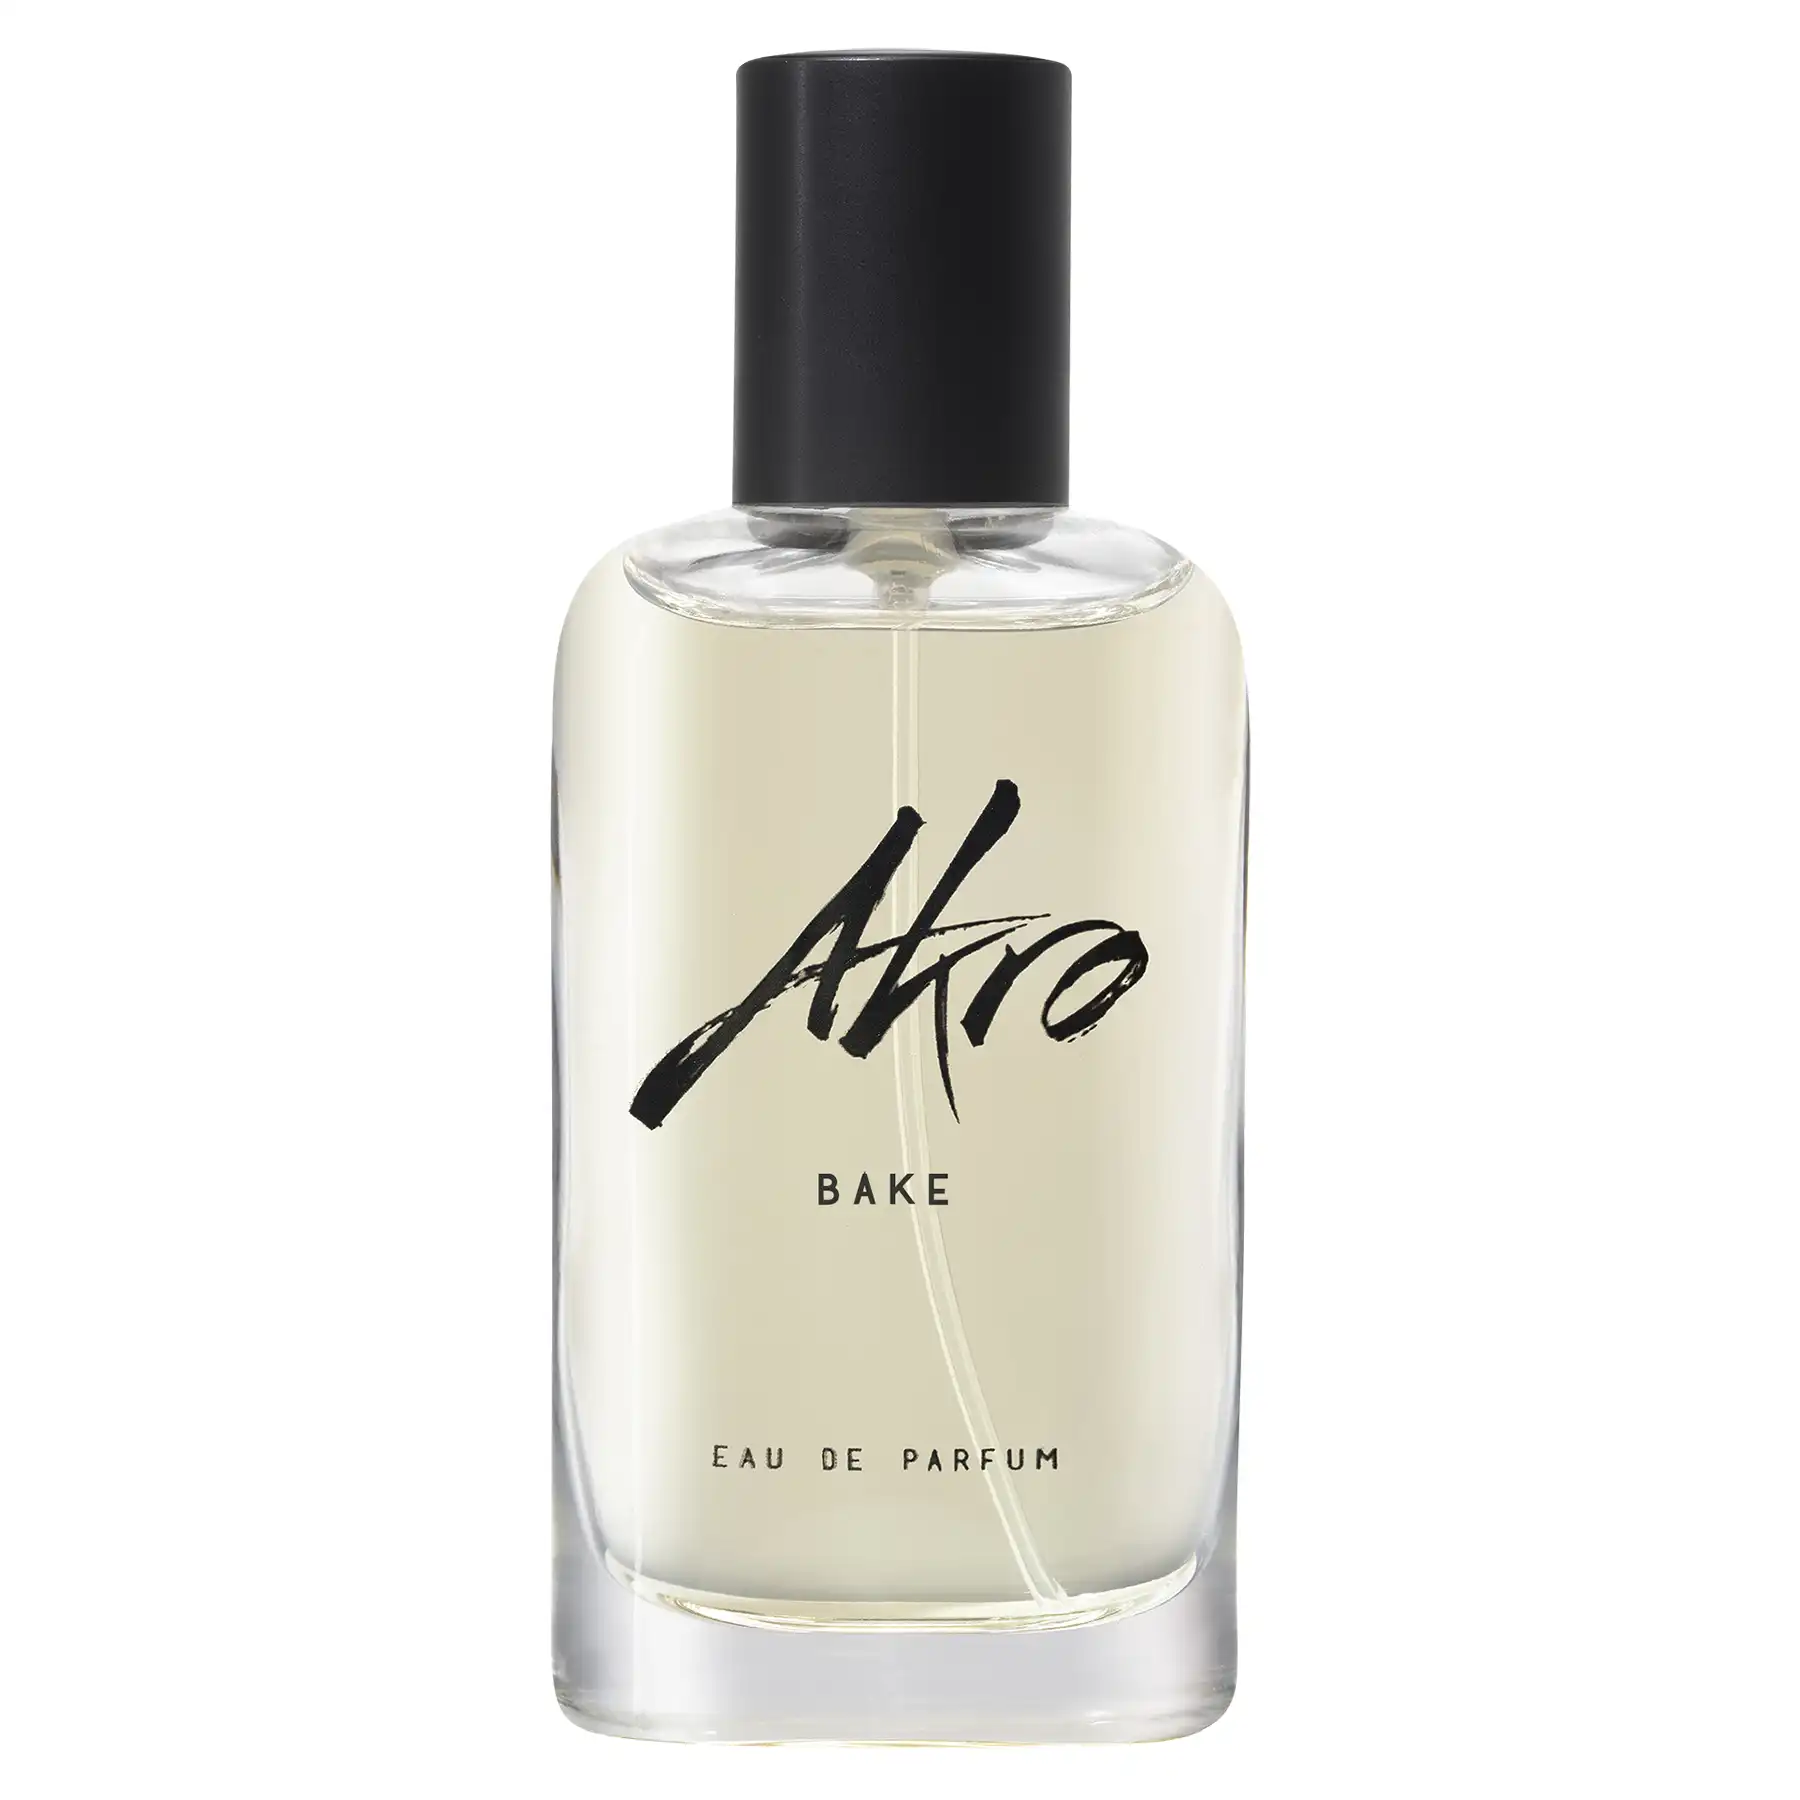 Akro BAKE Eau de Parfum 30ml